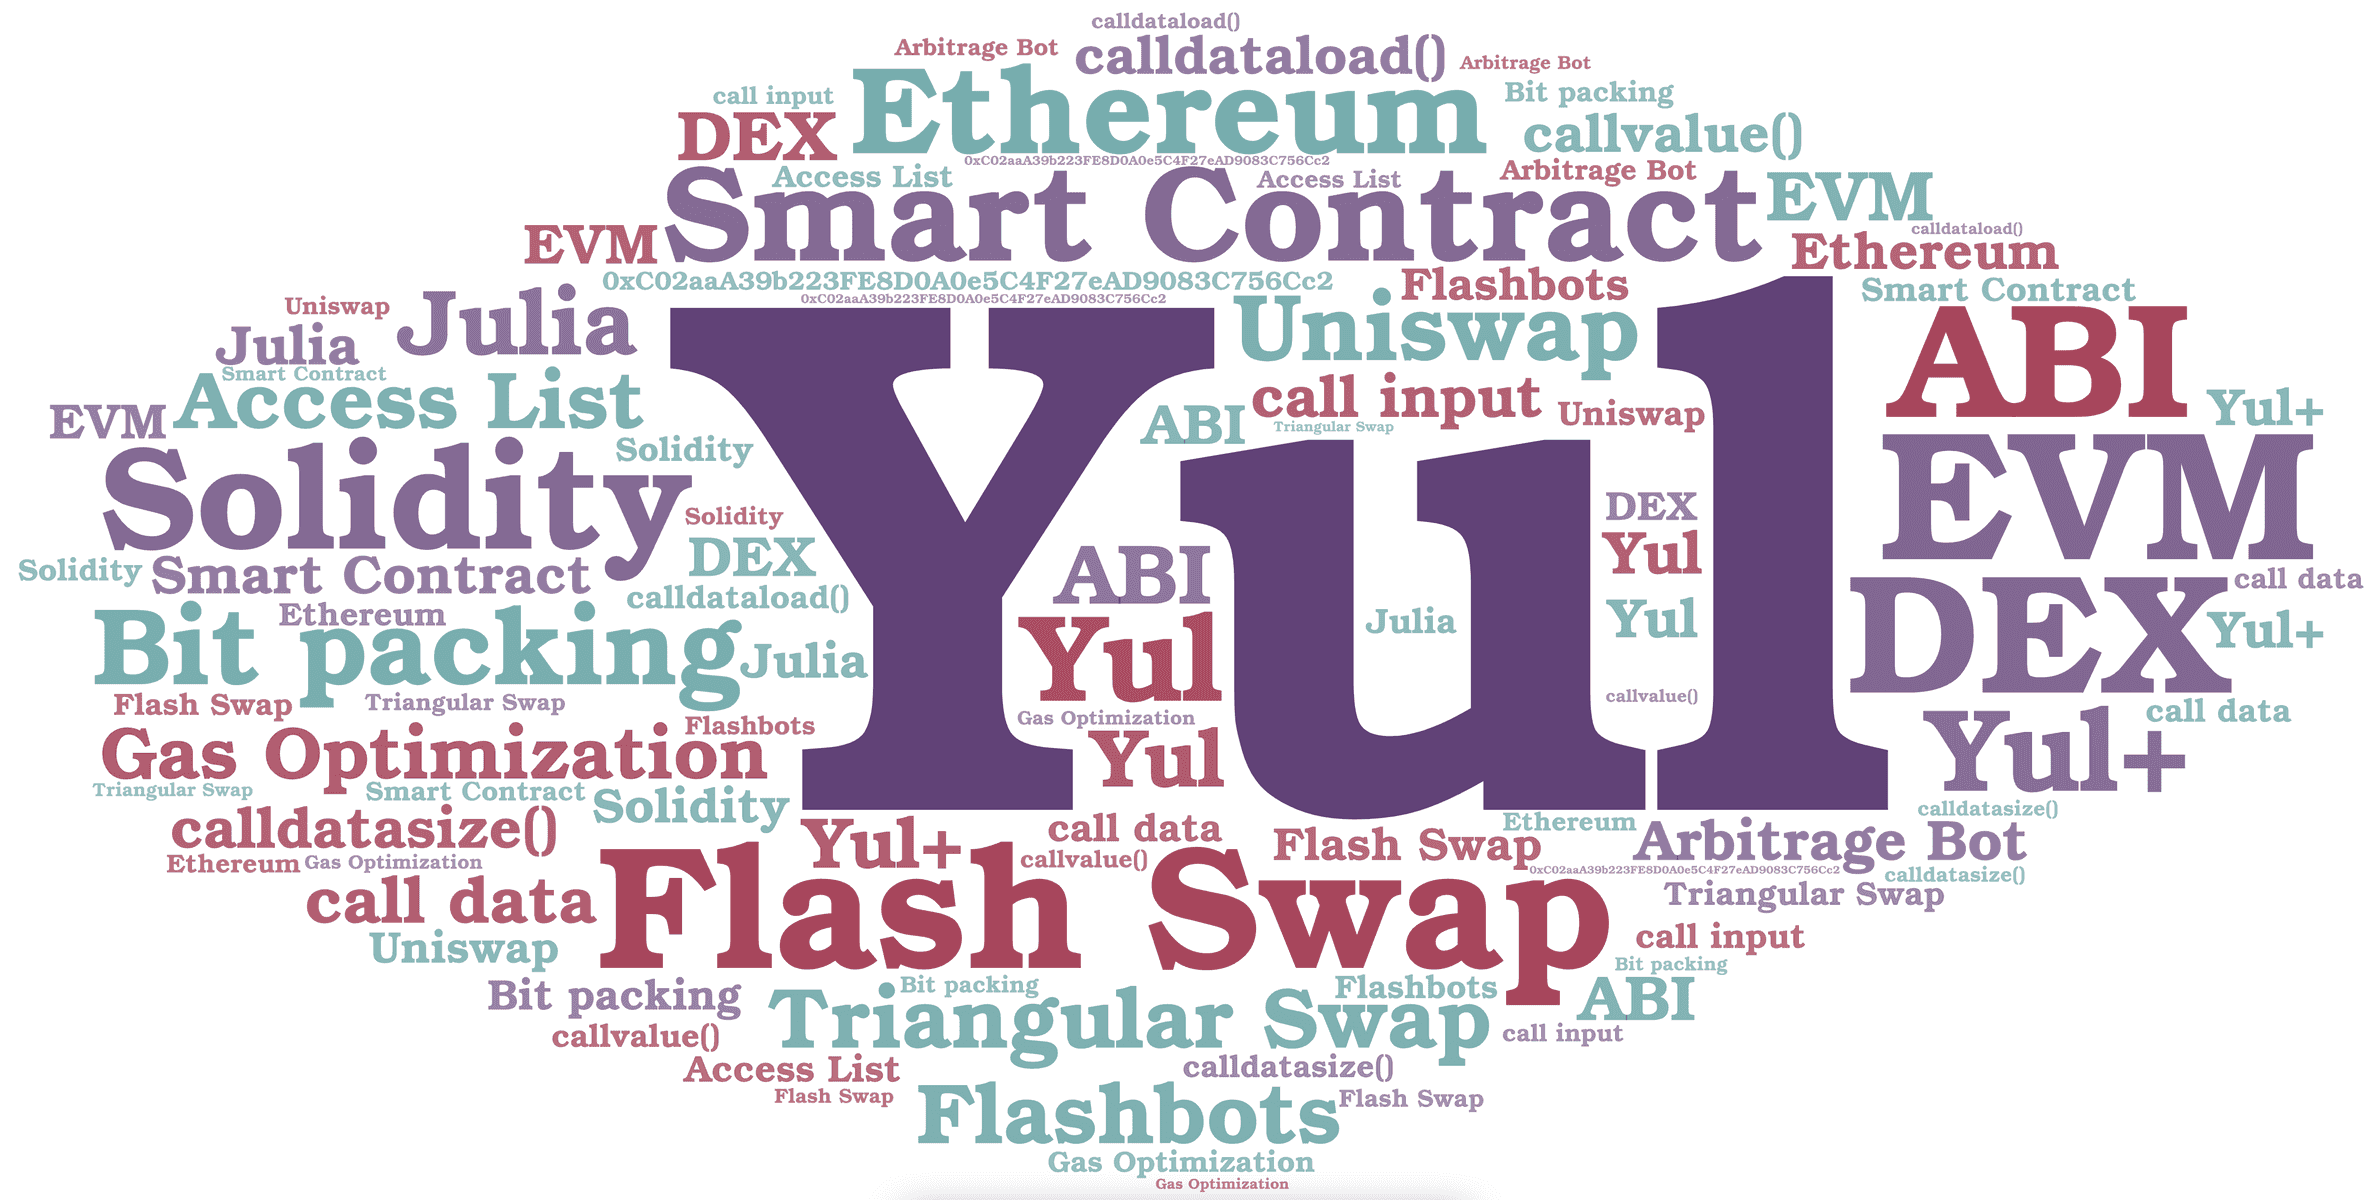 Yul Smart Contract for Uniswap Arbitrage